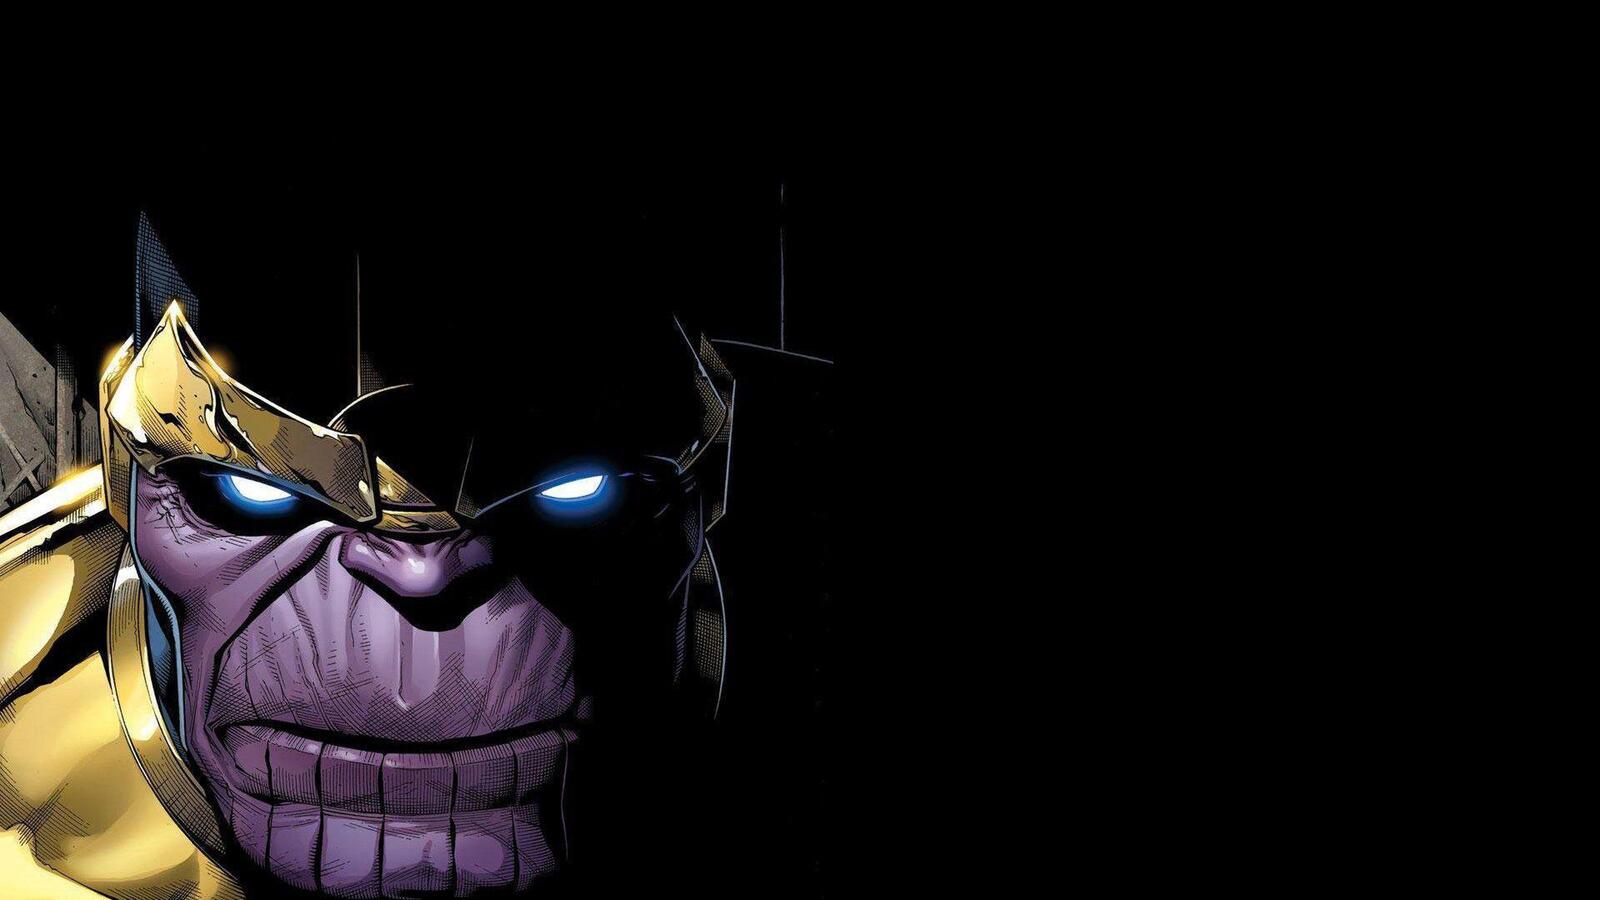 Wallpapers Thanos hero illustration on the desktop